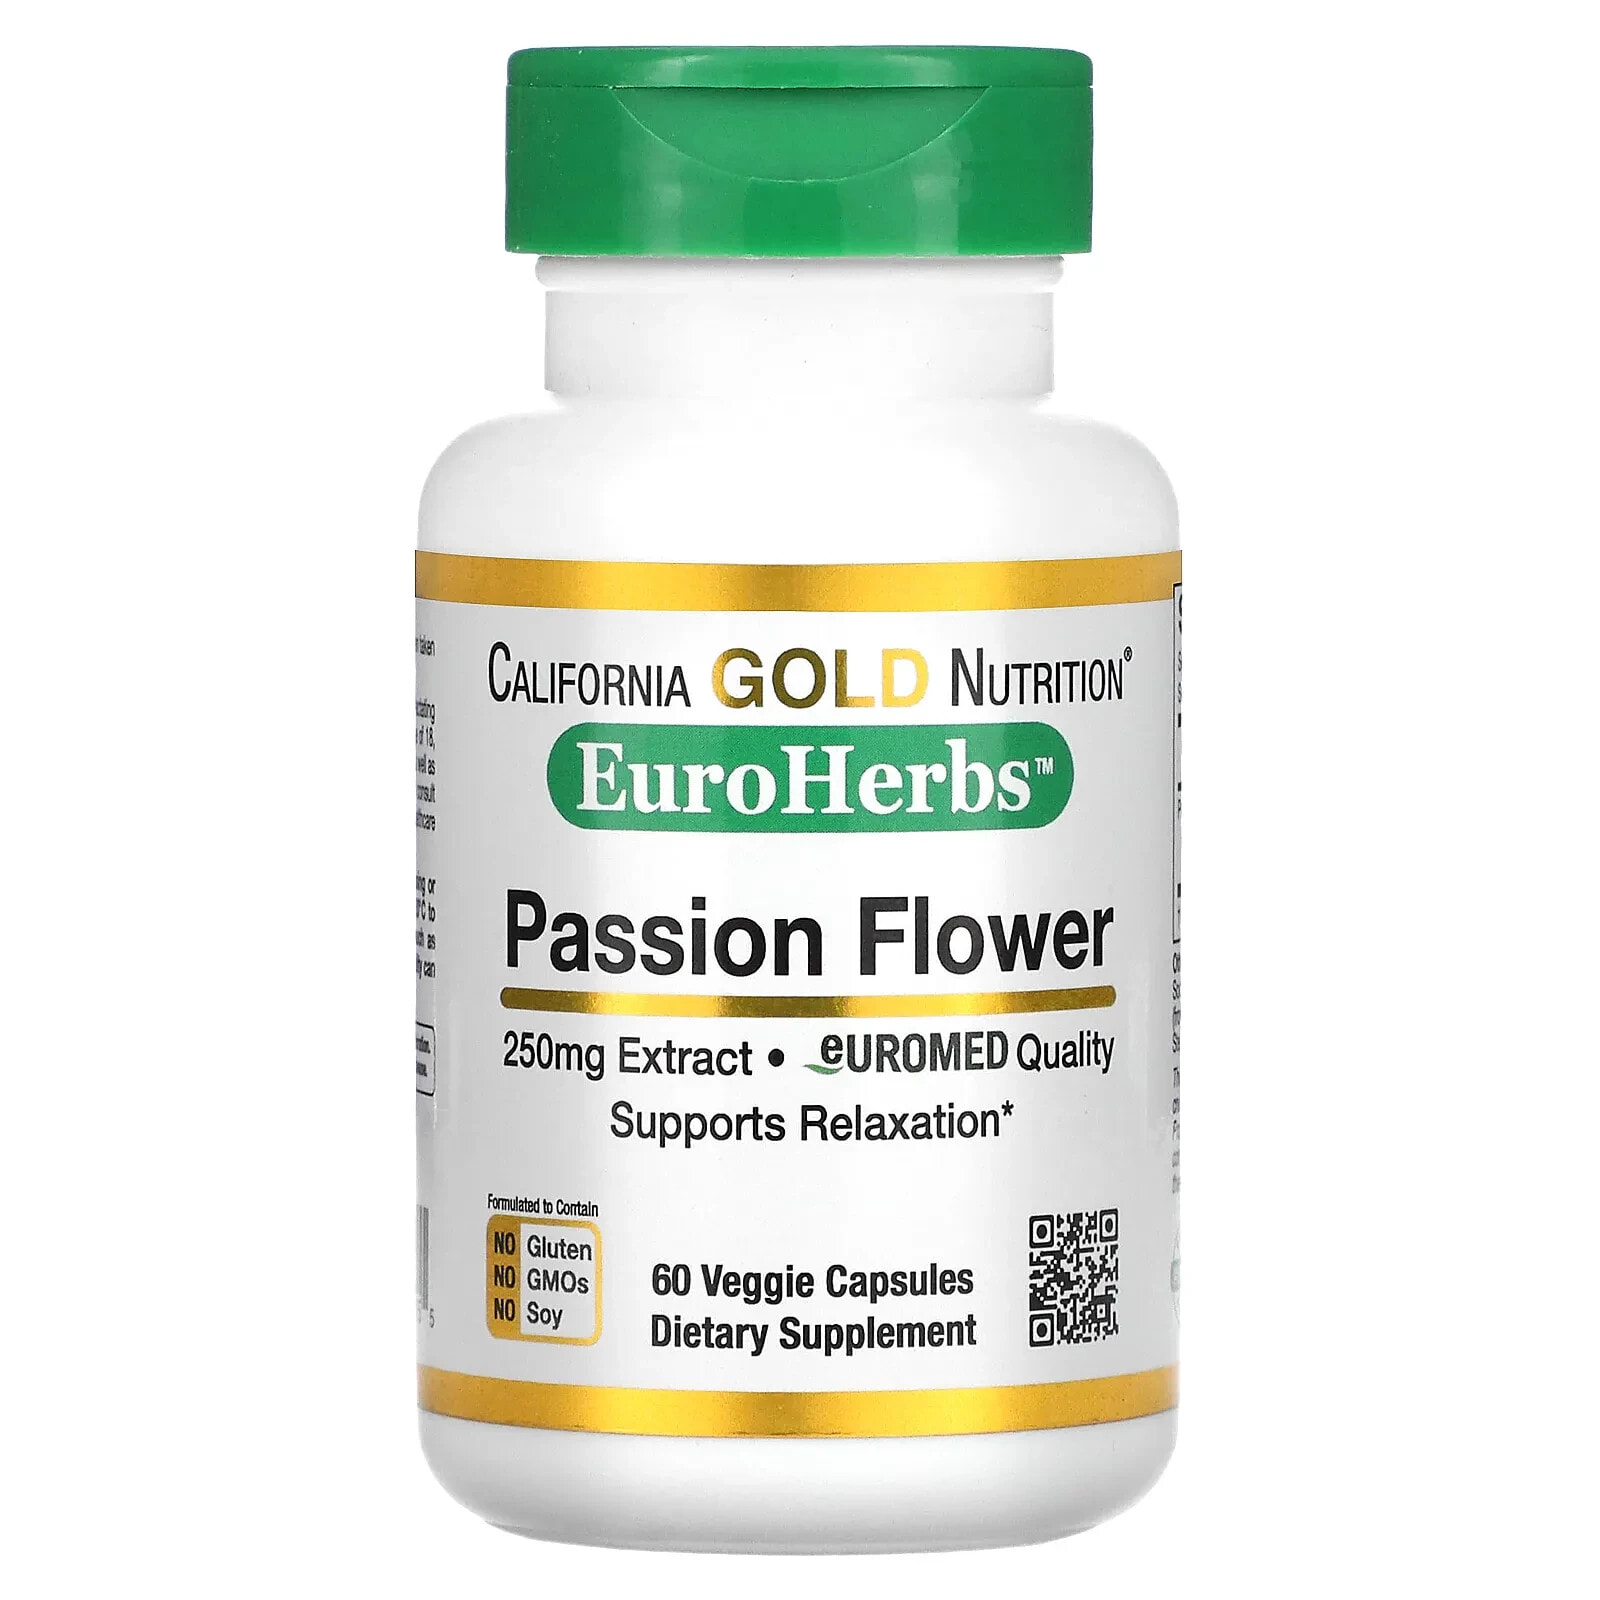 California Gold Nutrition, Passion Flower, EuroHerbs, European Quality, 250 mg, 60 Veggie Capsules